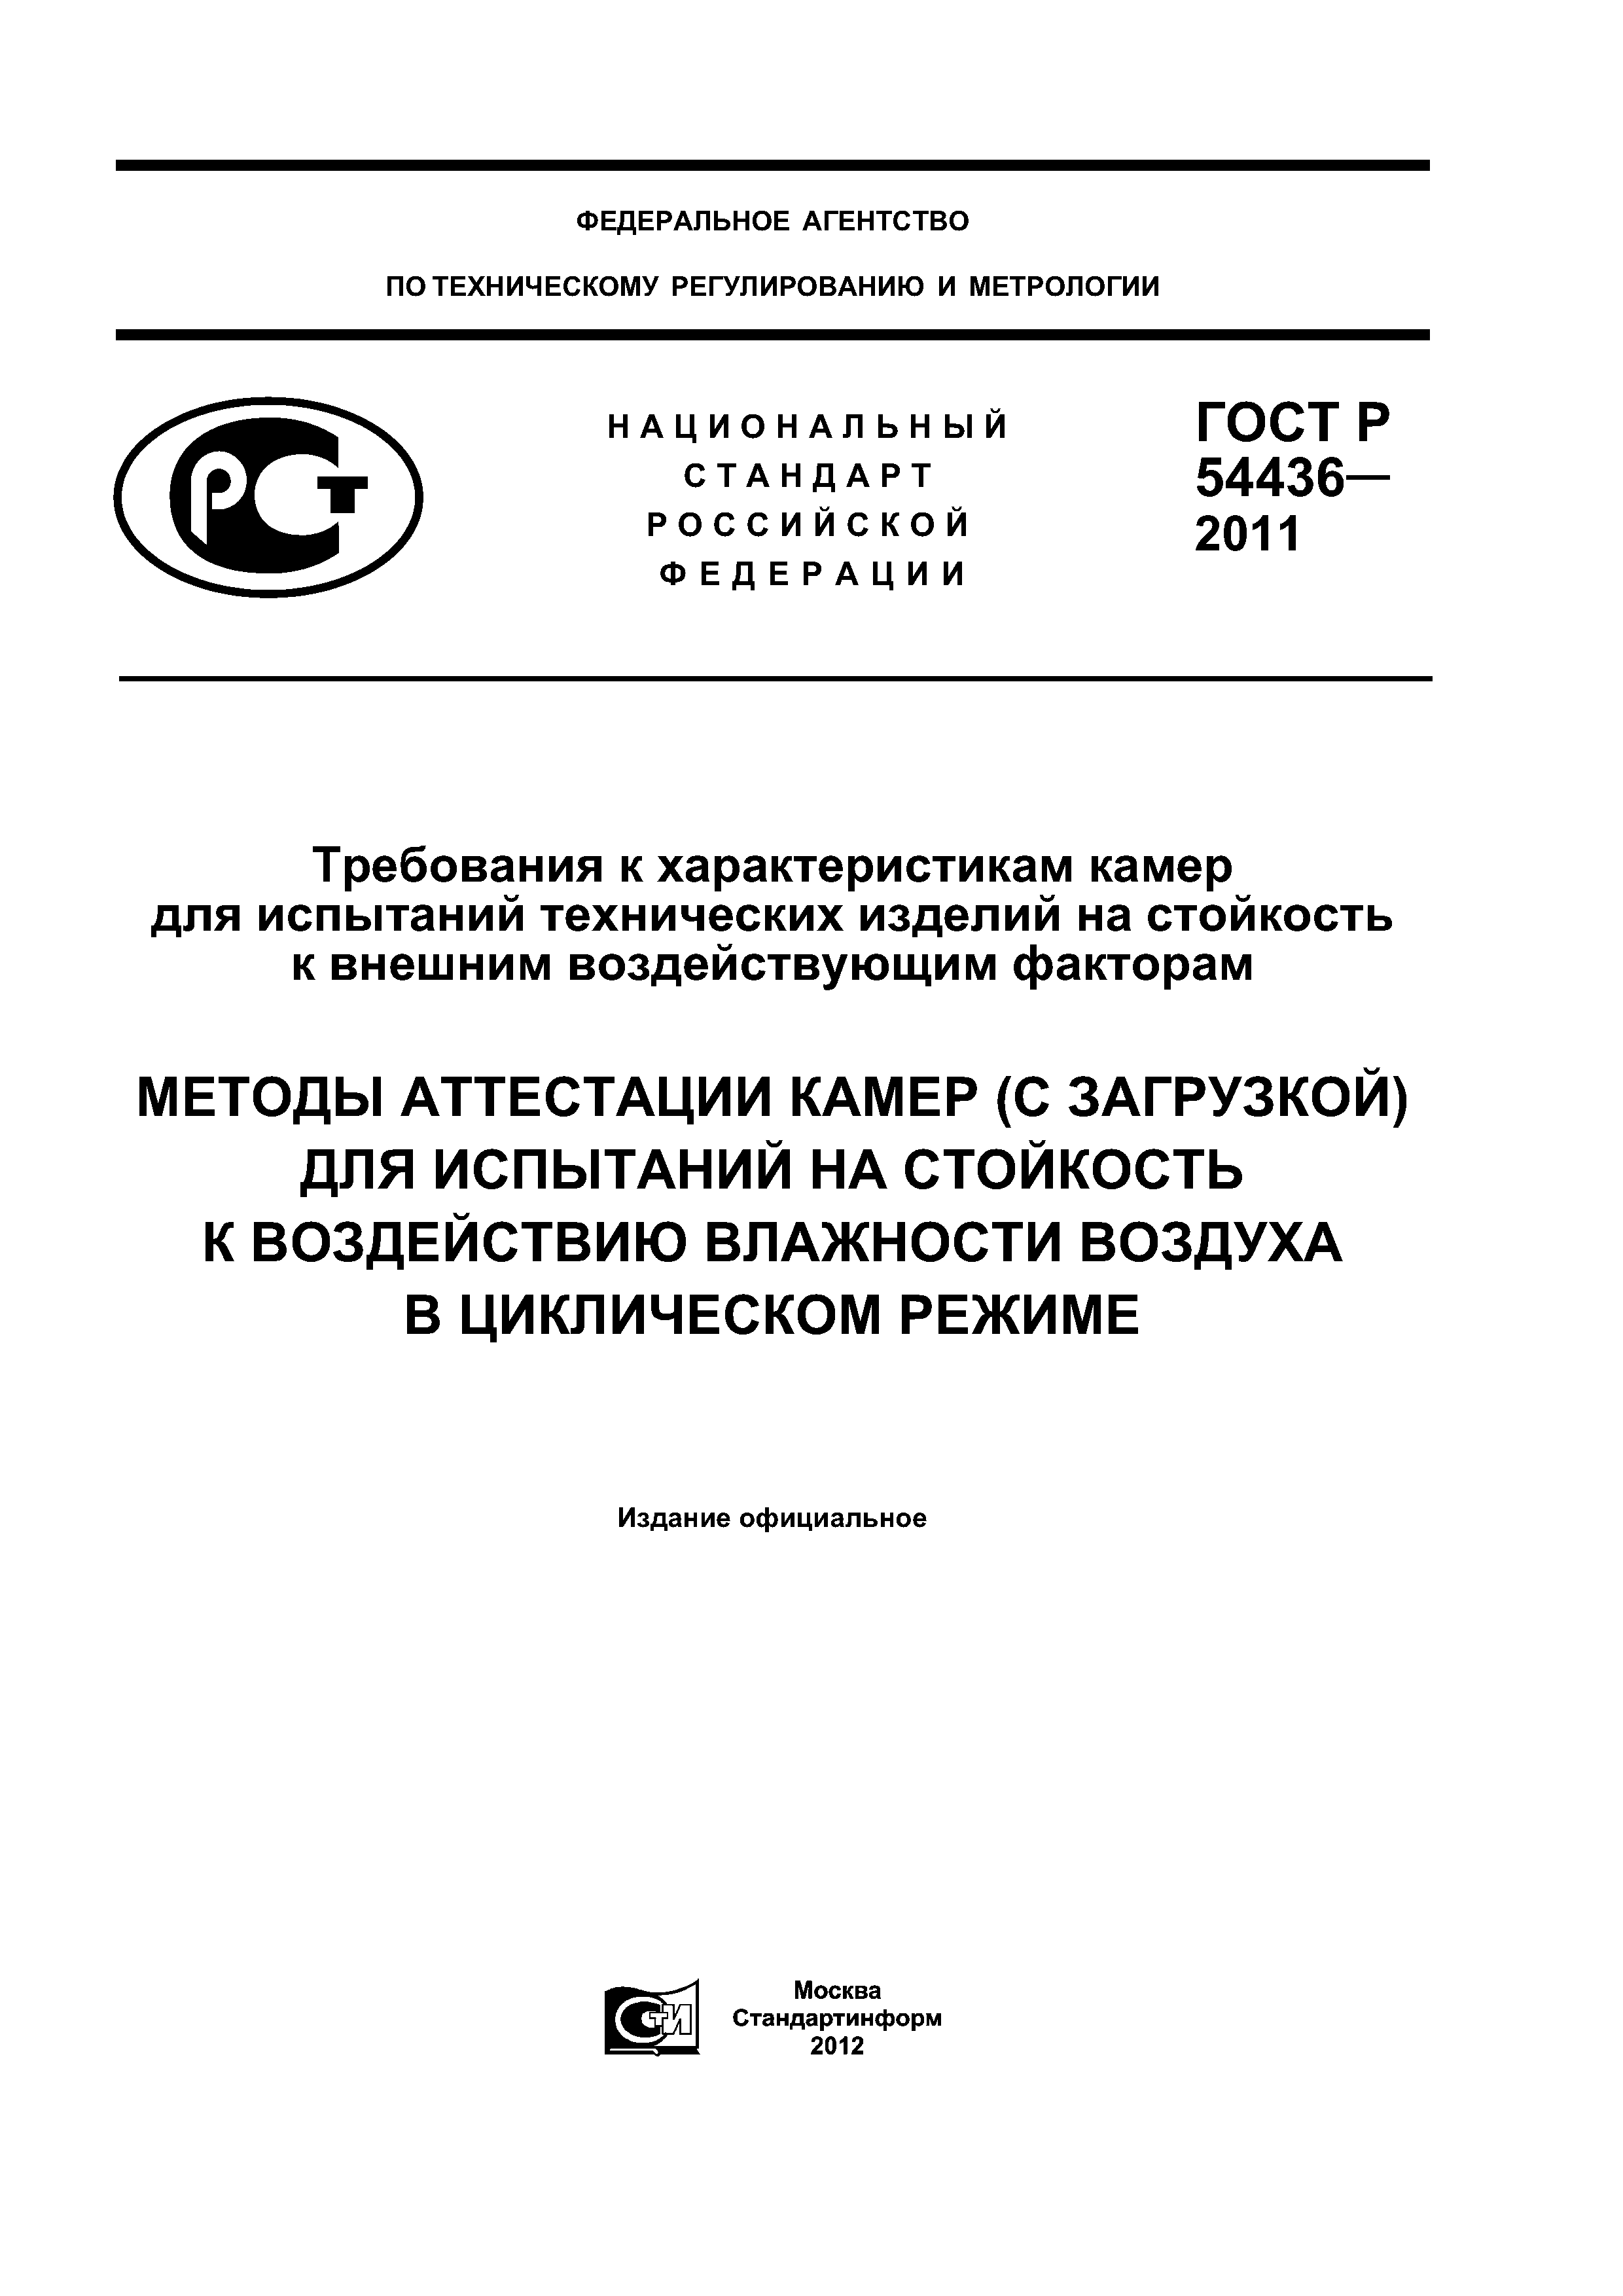 ГОСТ Р 54436-2011